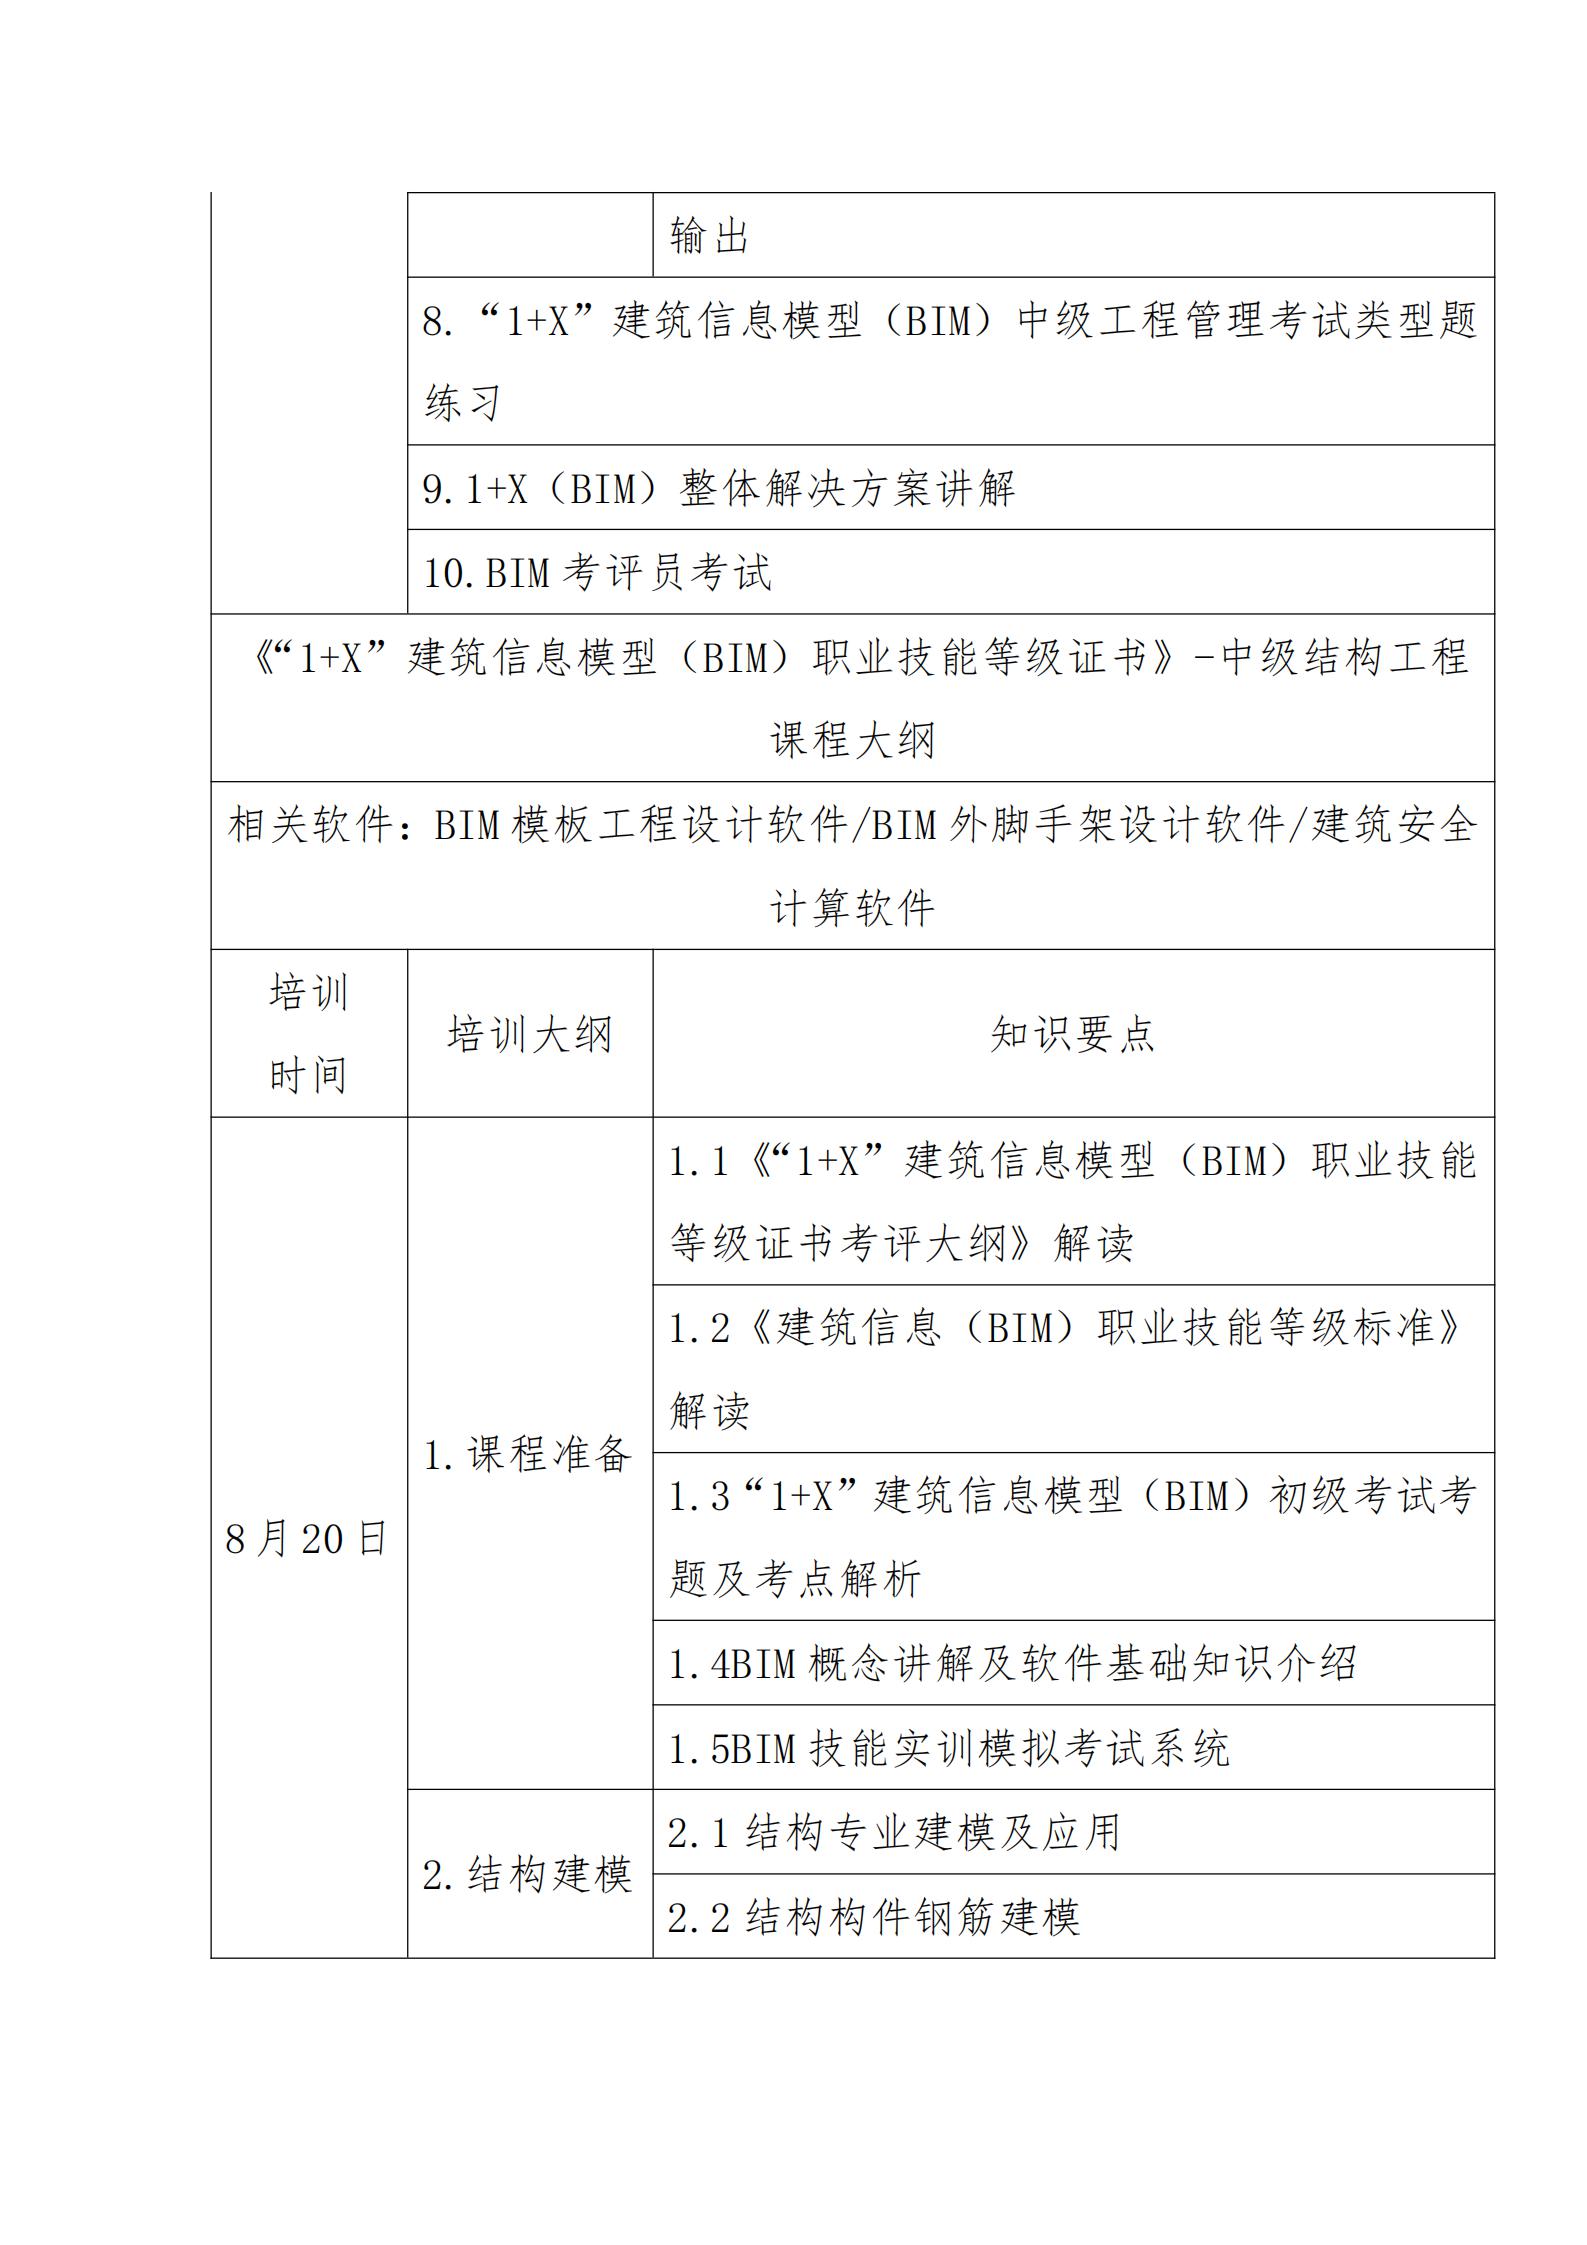 【BIM培训】安徽省2021年暑期1+X建筑信息模型(BIM)职业技能等级师资培训班通知(图9)